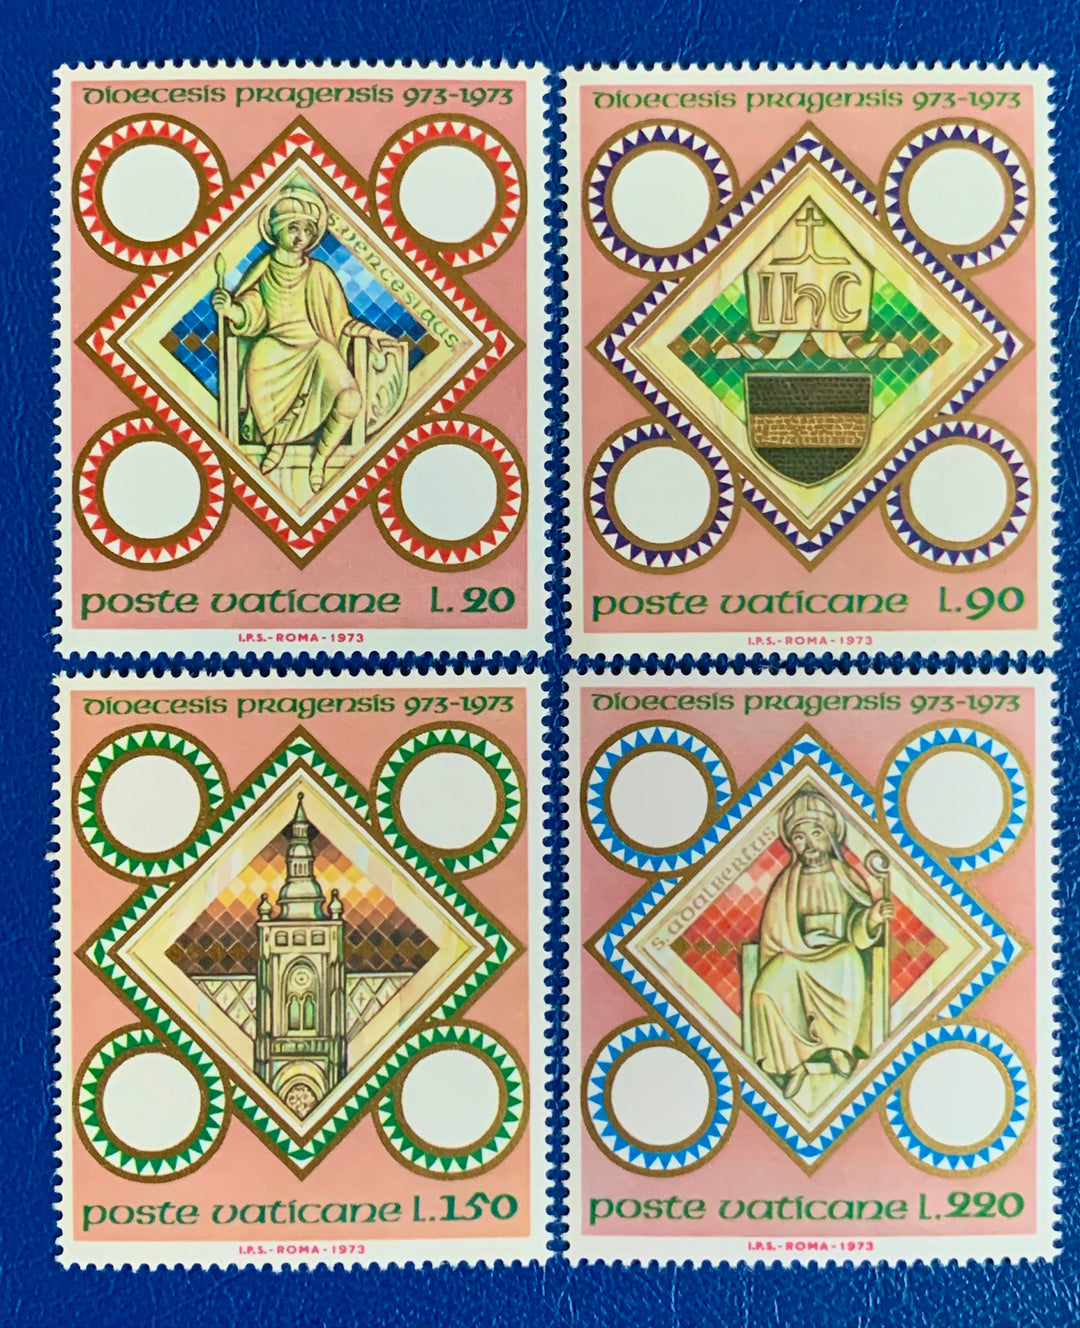 Vatican - Original Vintage Postage Stamps- 1973 - Millennium of Diocese of Prague - for the collector, artist or crafter